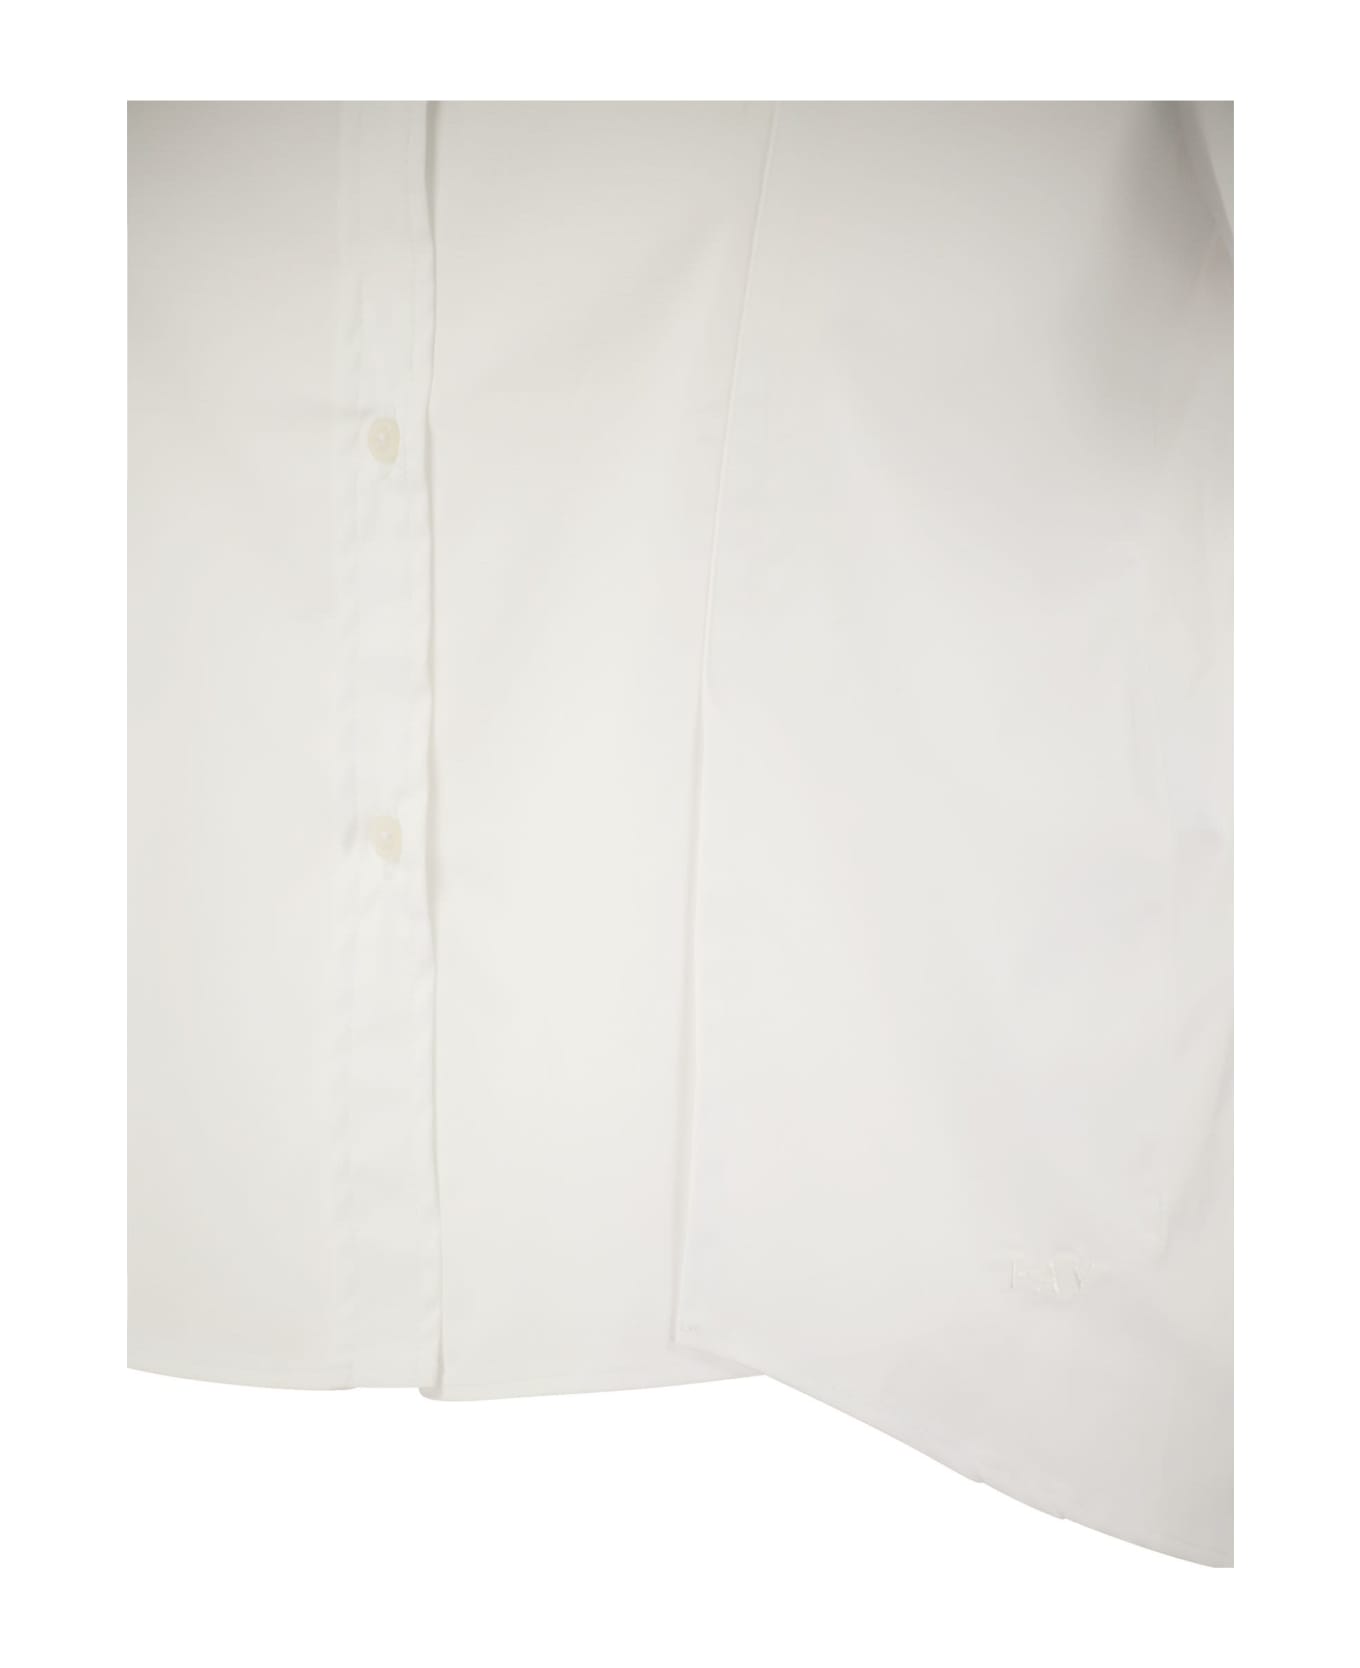 Fay Cotton Shirt With Mandarin Collar - White シャツ